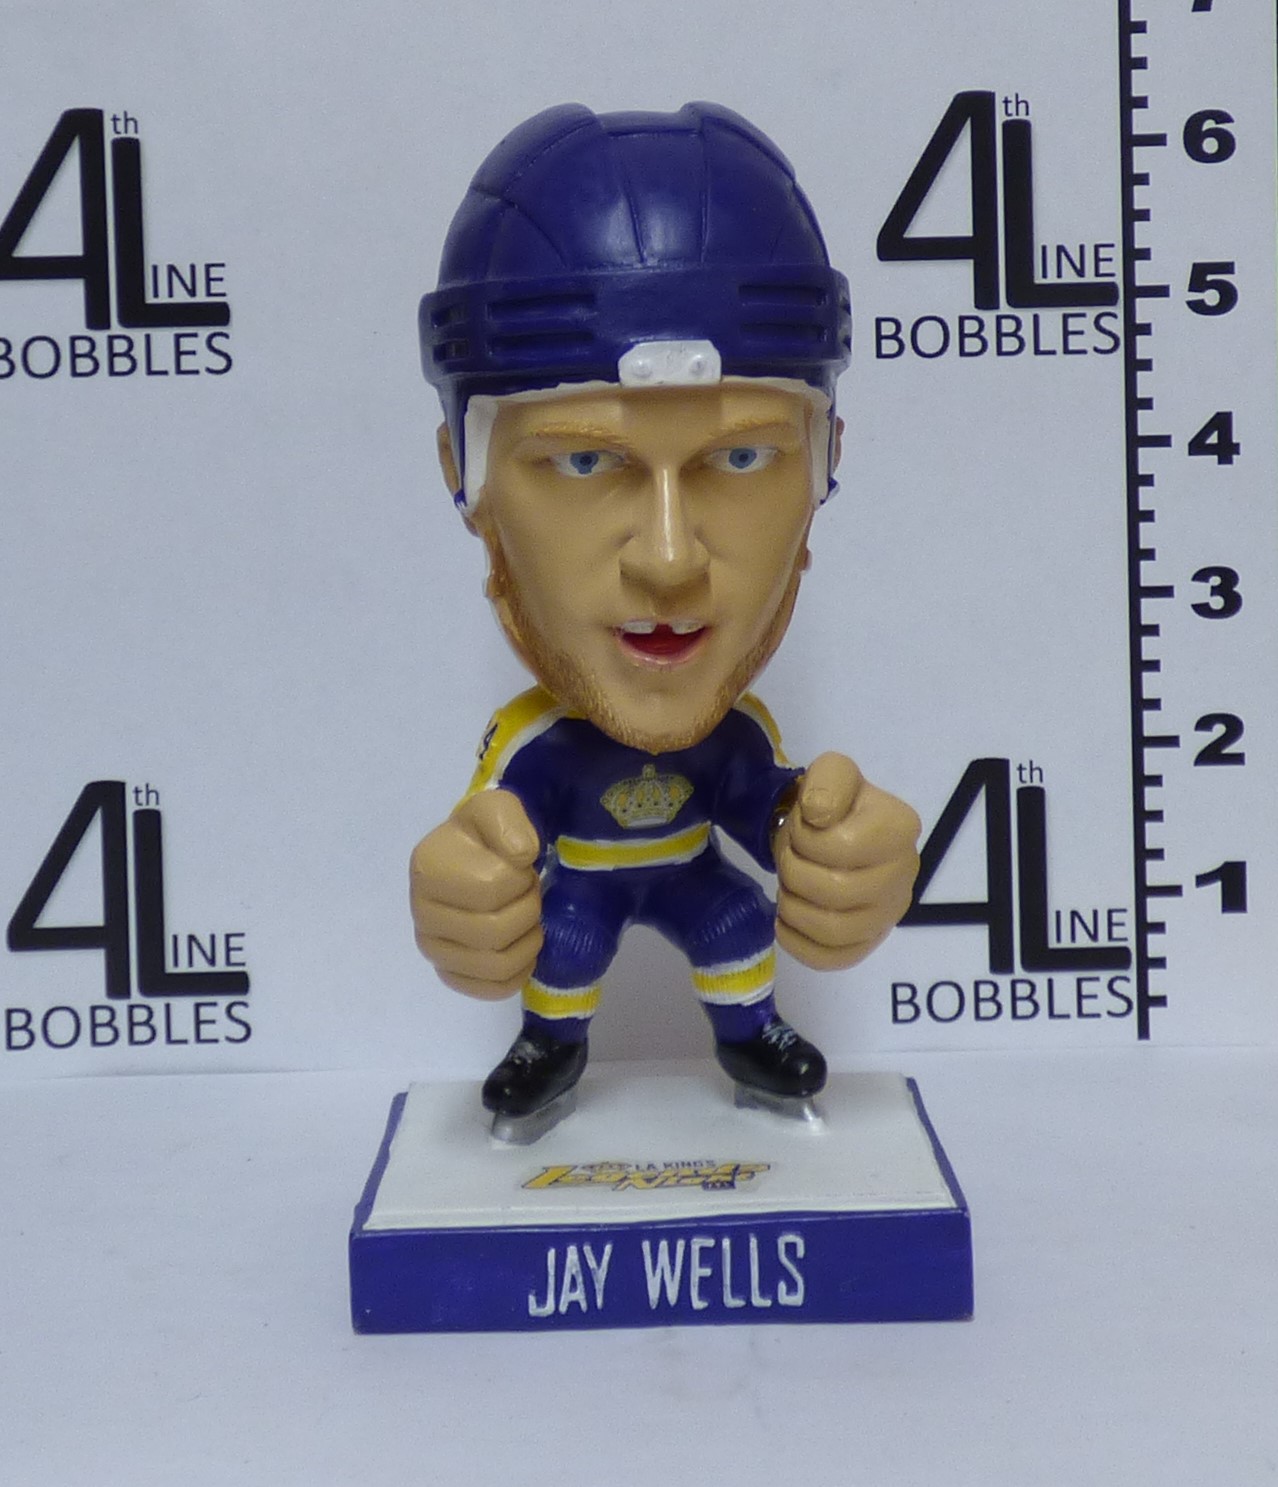 Jay Wells bobblehead